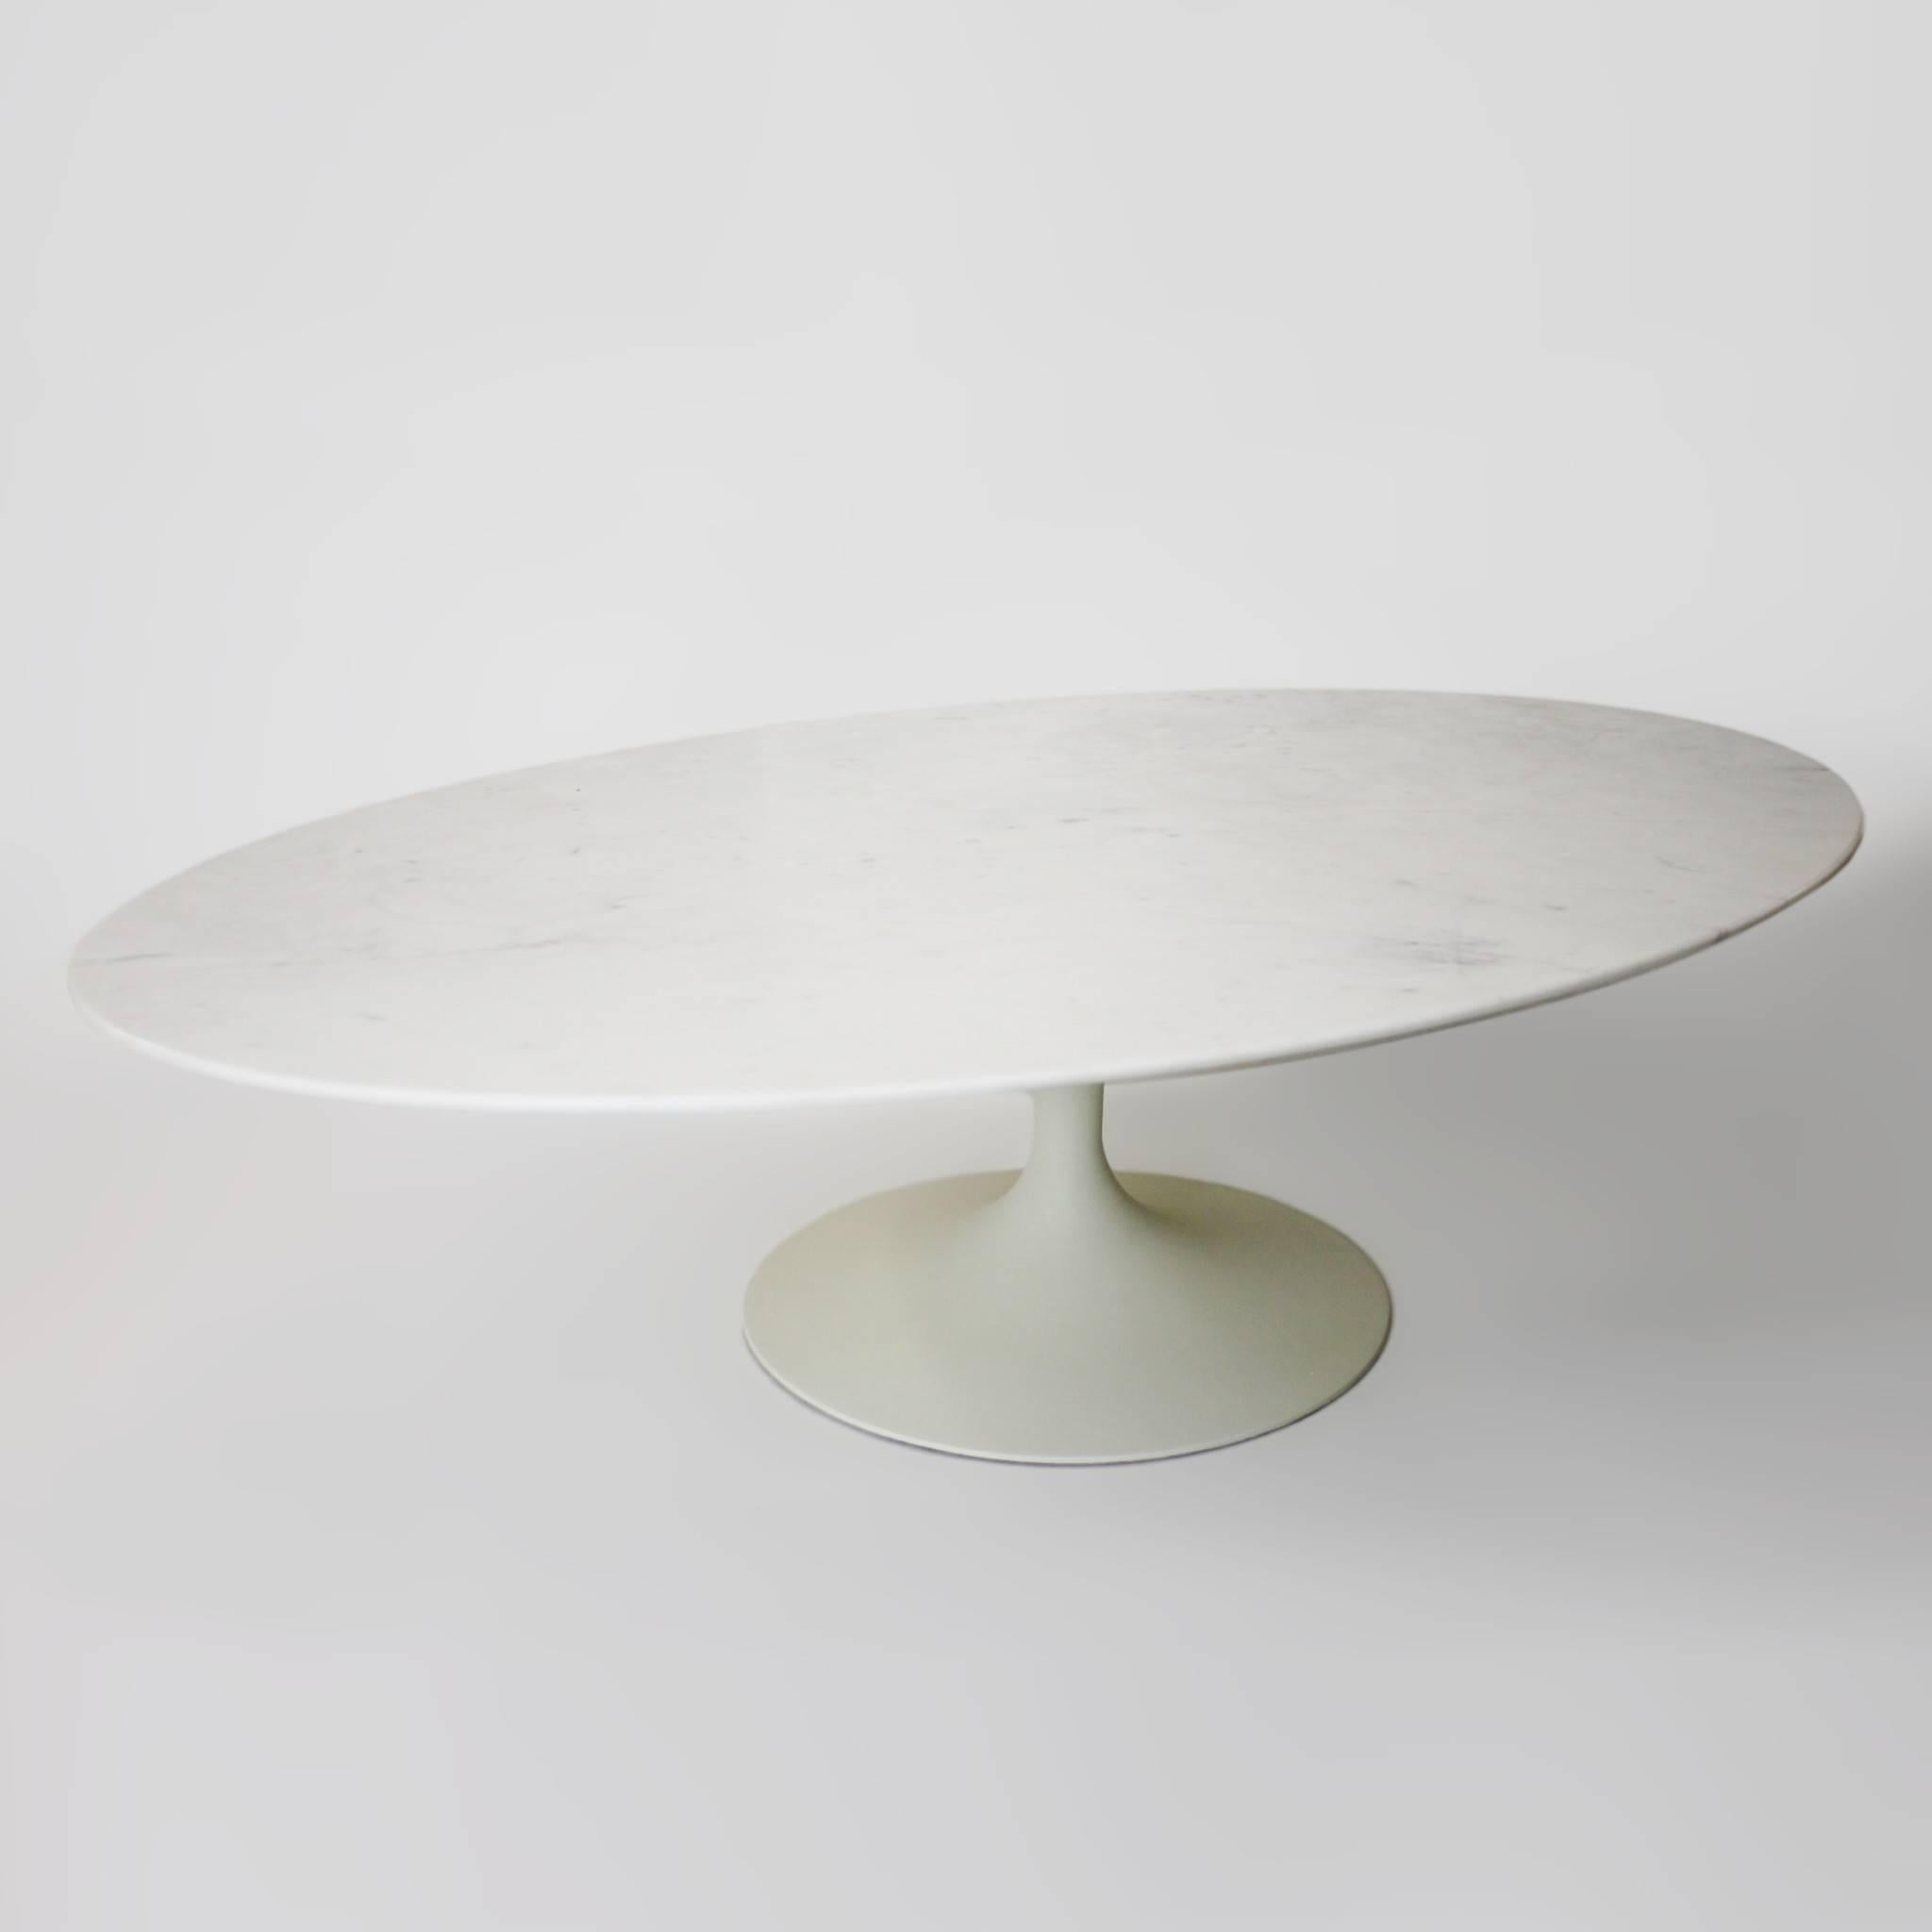 American Early Mid-Century Modern Marble-Top Tulip Coffee and Side Table by Eero Saarinen